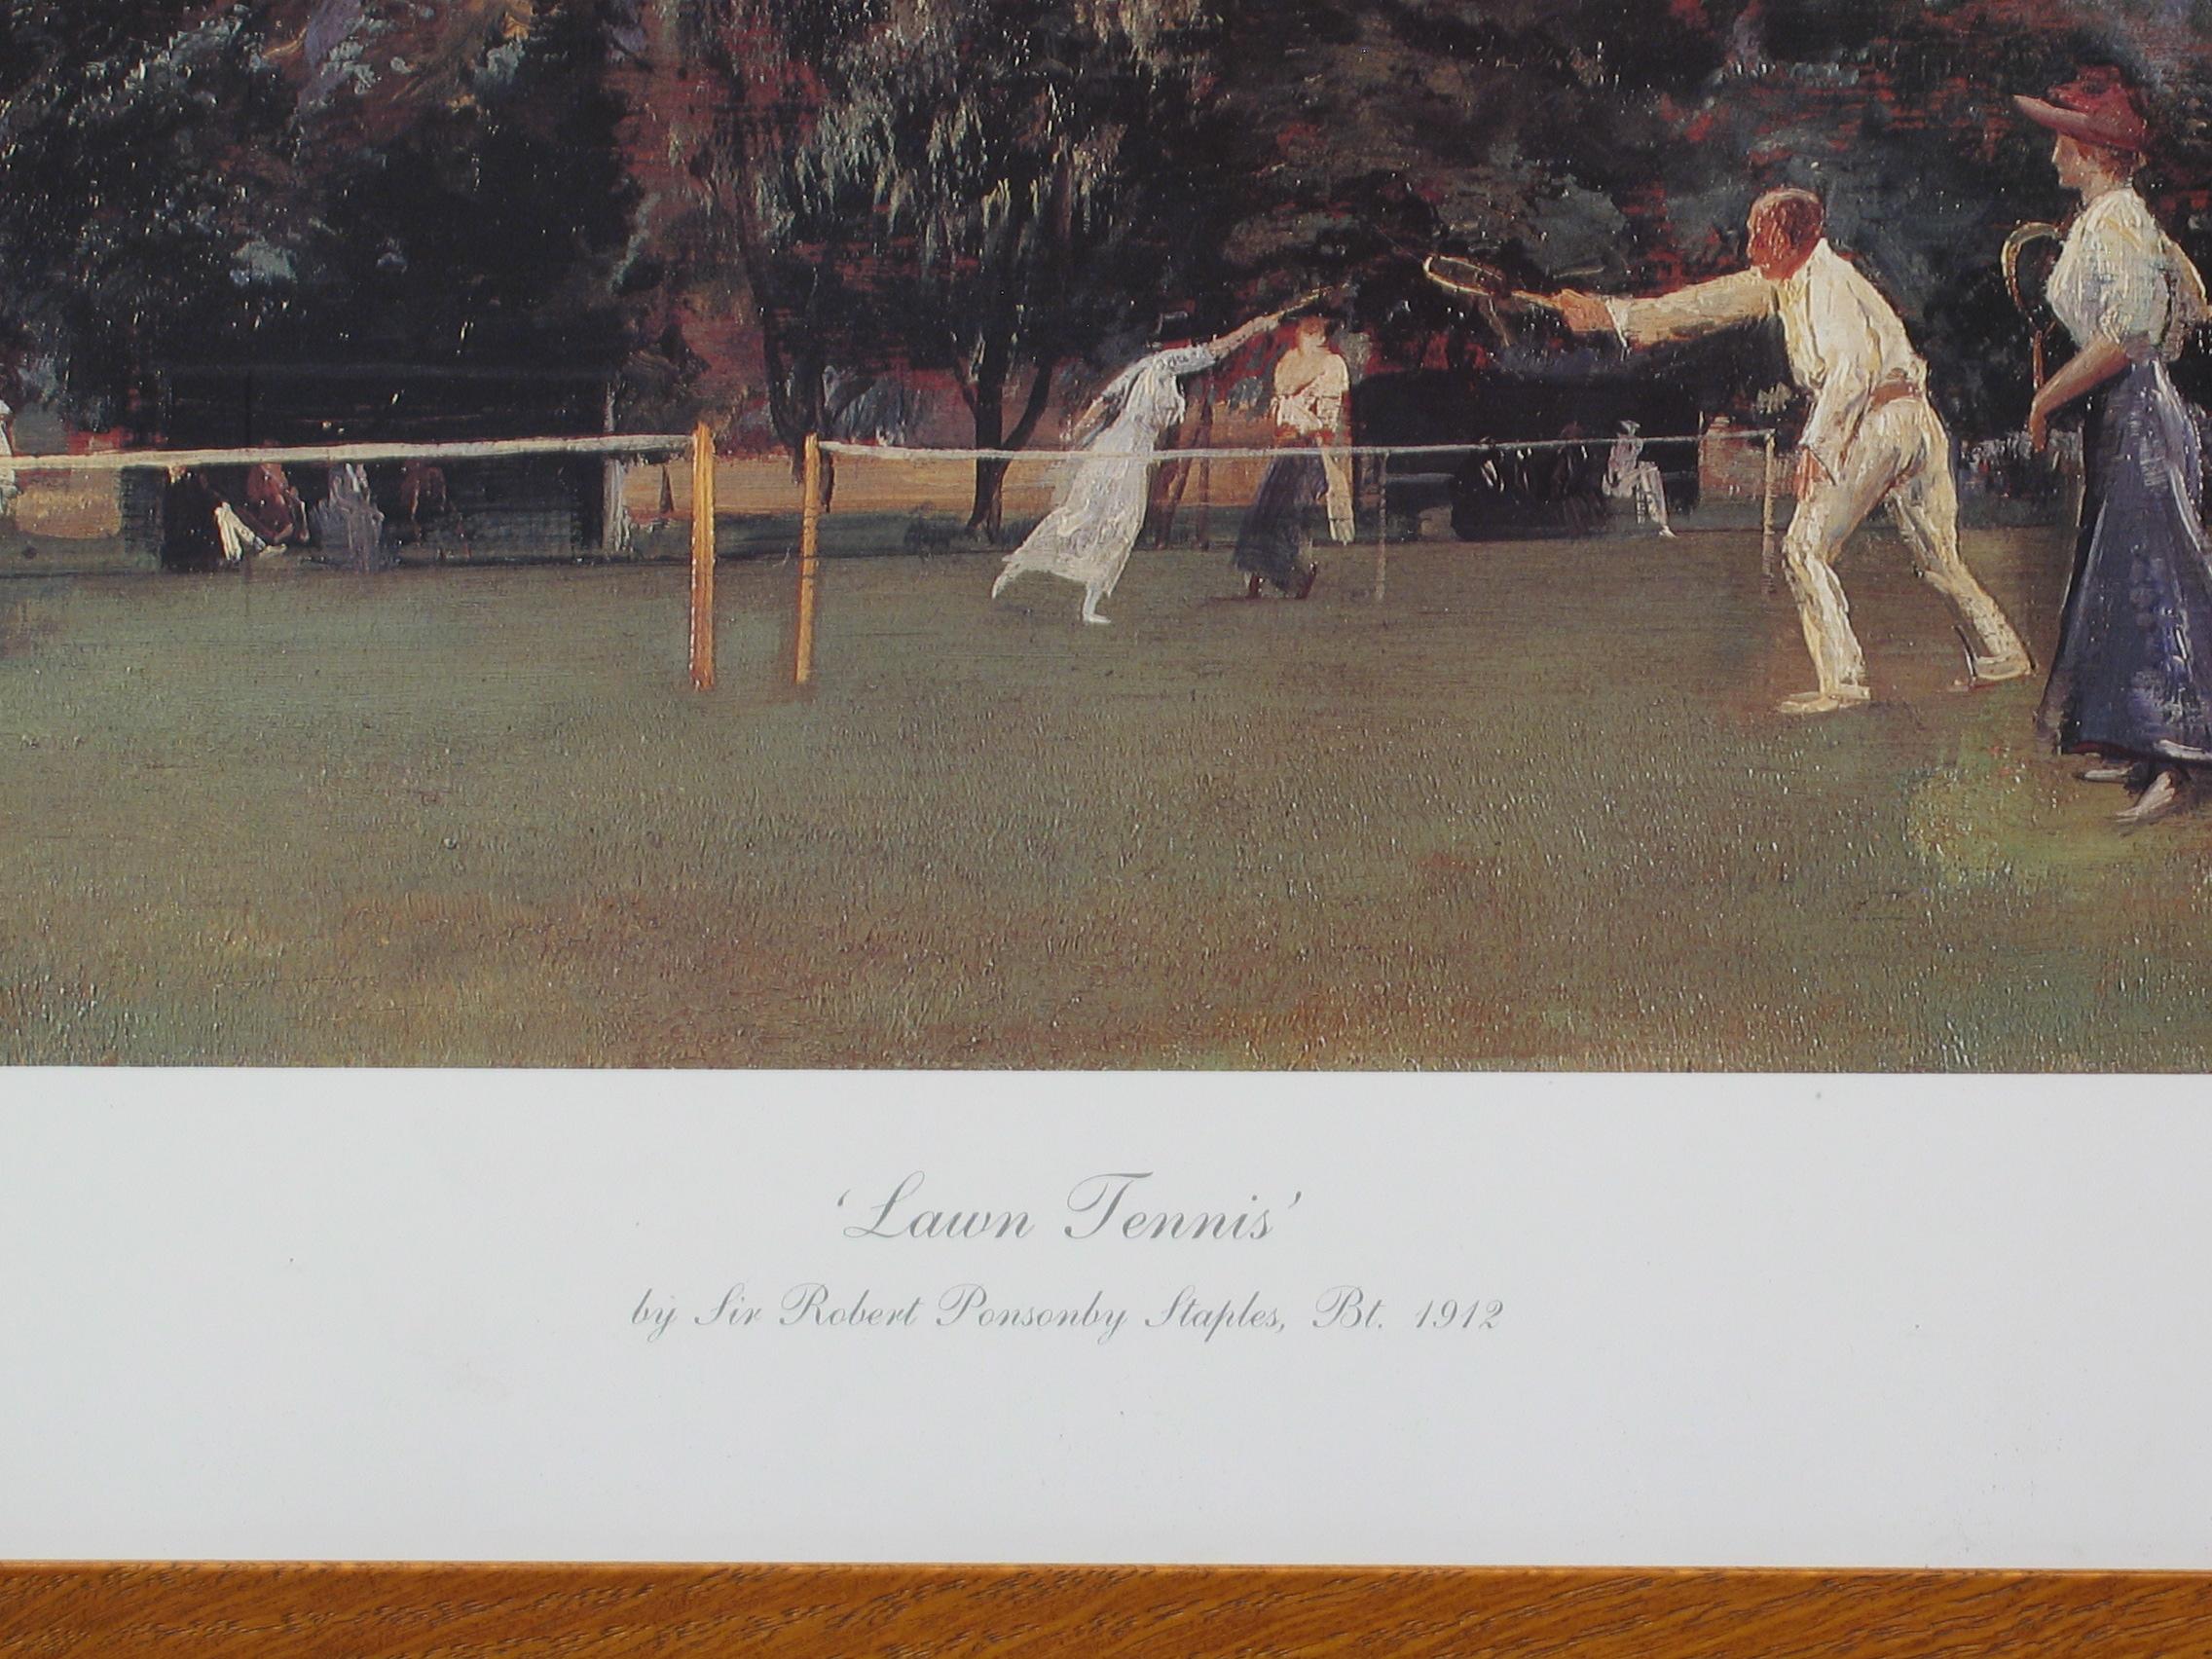 Sporting Art Lawn Tennis, Ltd. Edition Print, 1912 Newcastle Co. Down, Ireland For Sale